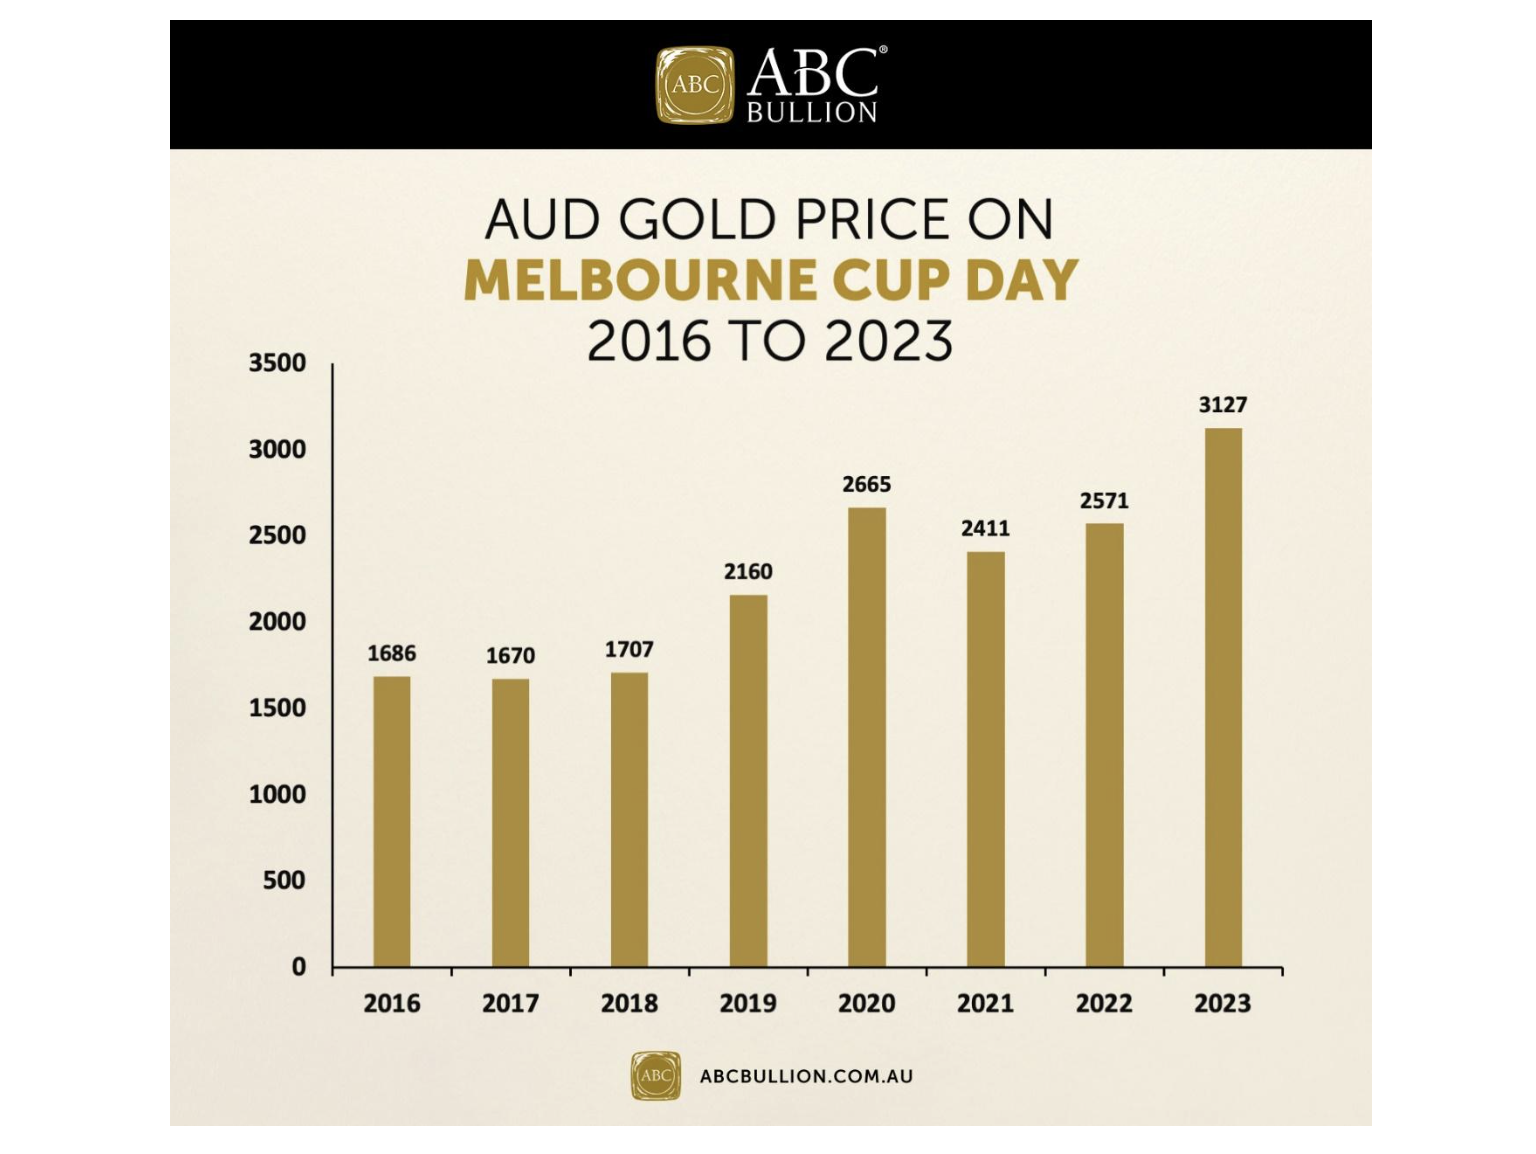 Source: ABC Bullion, World Gold Council